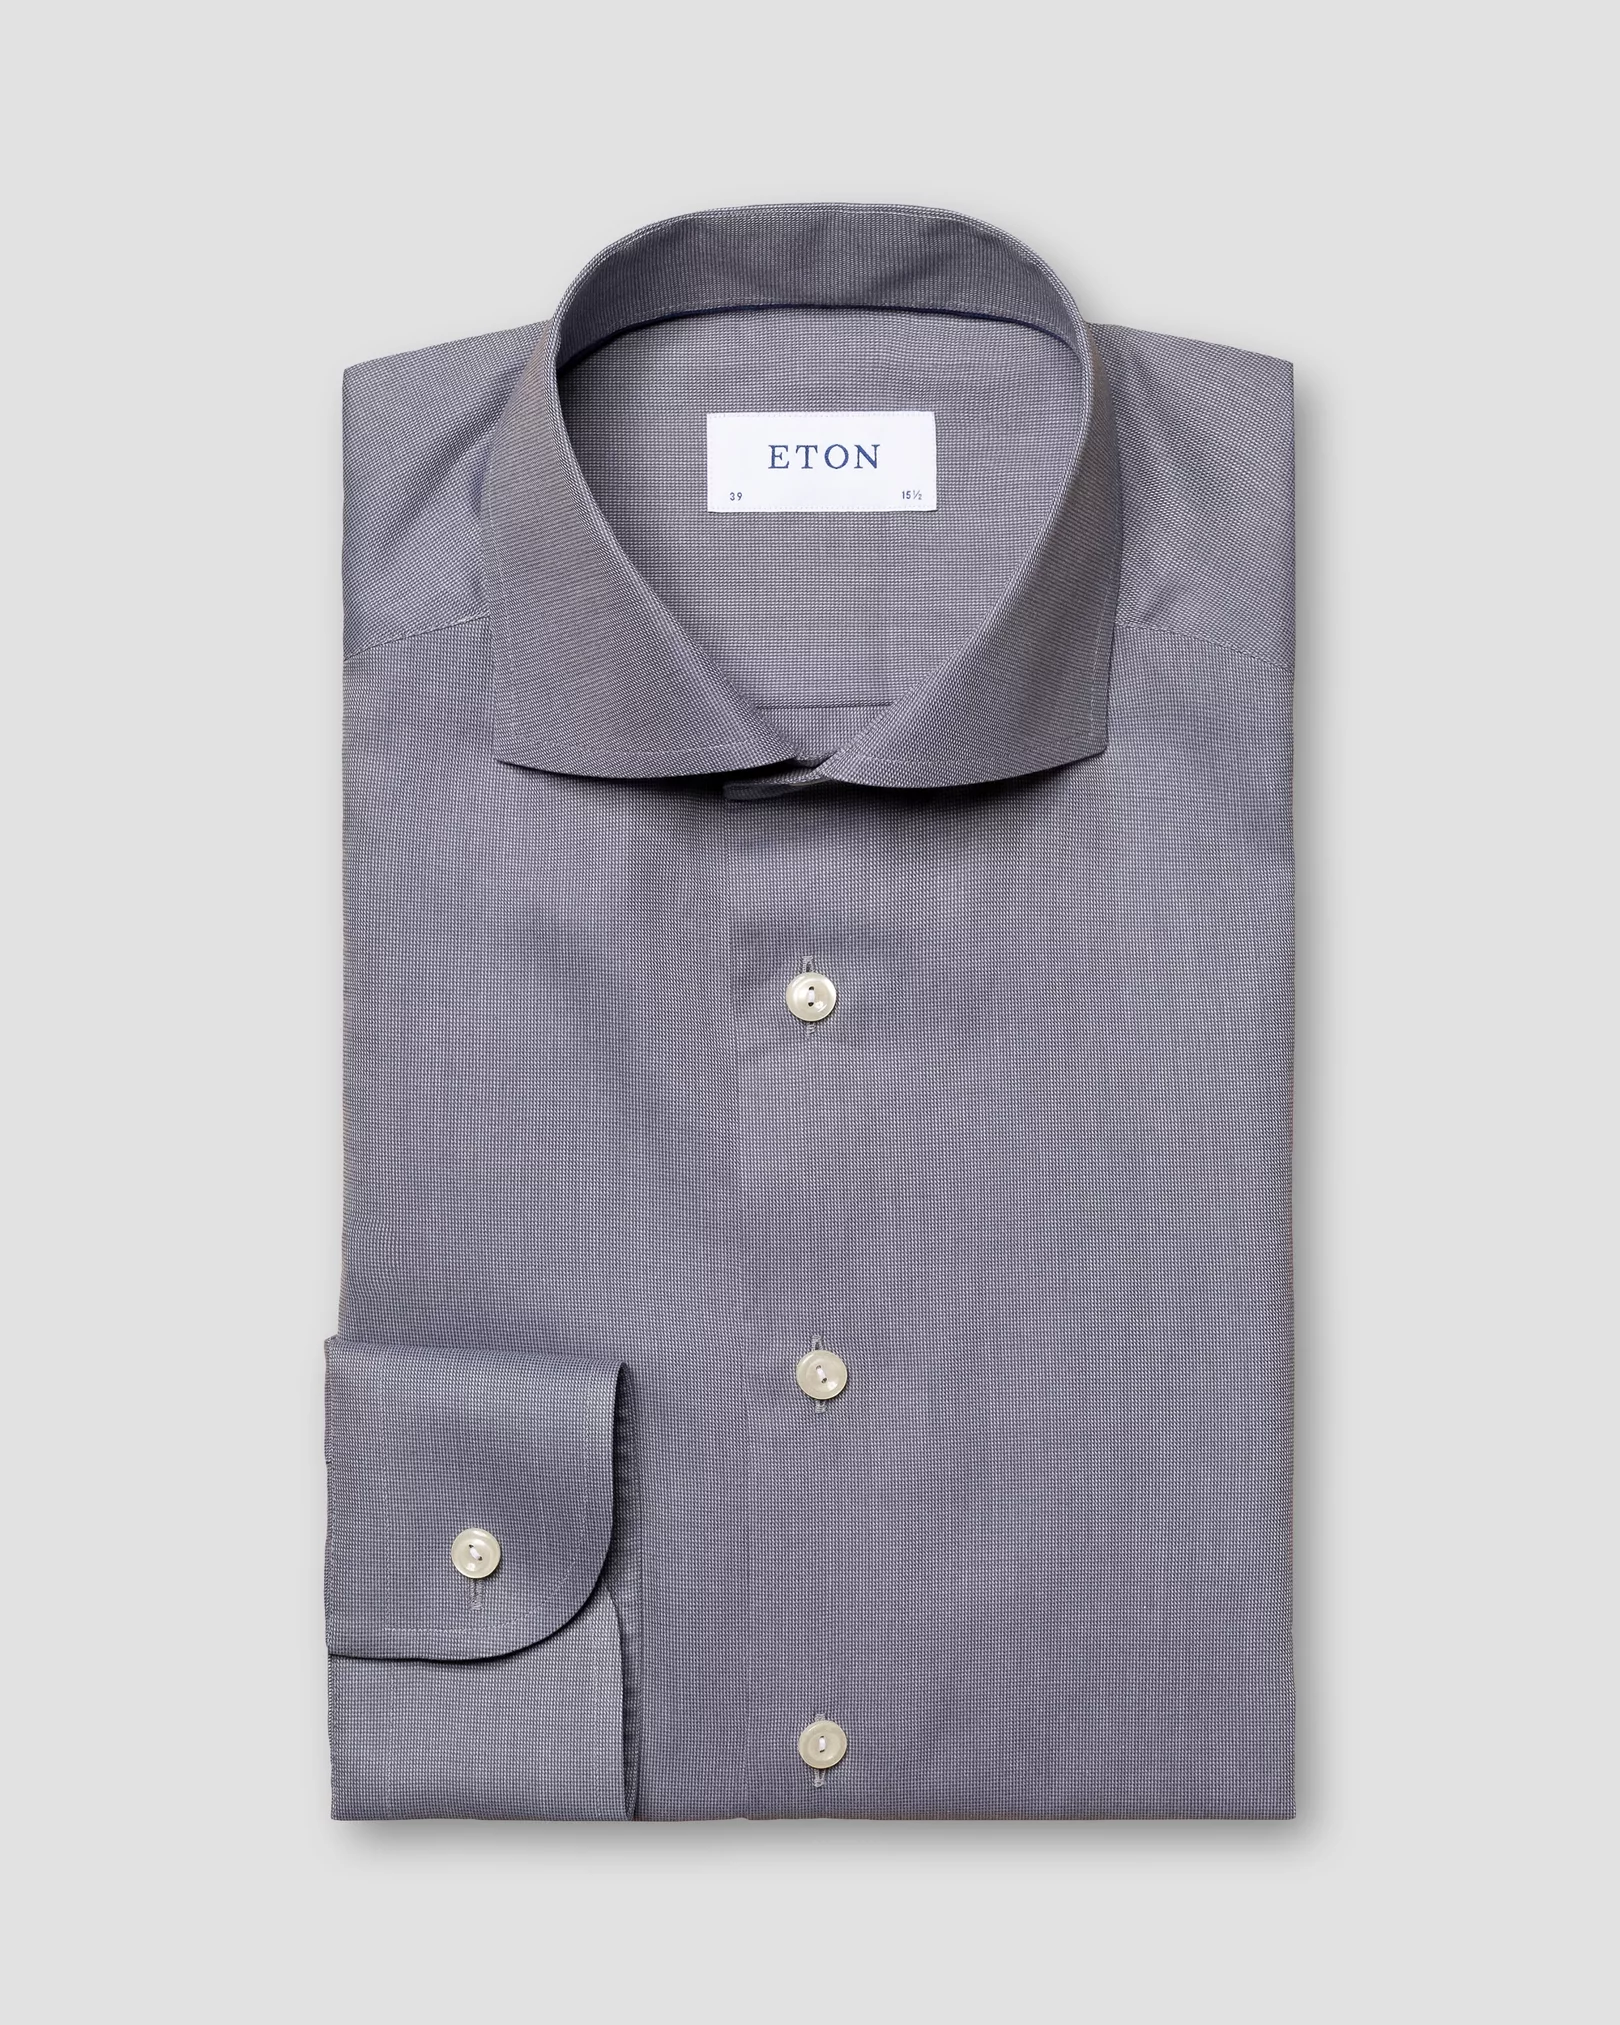 Eton - gray flannel shirt